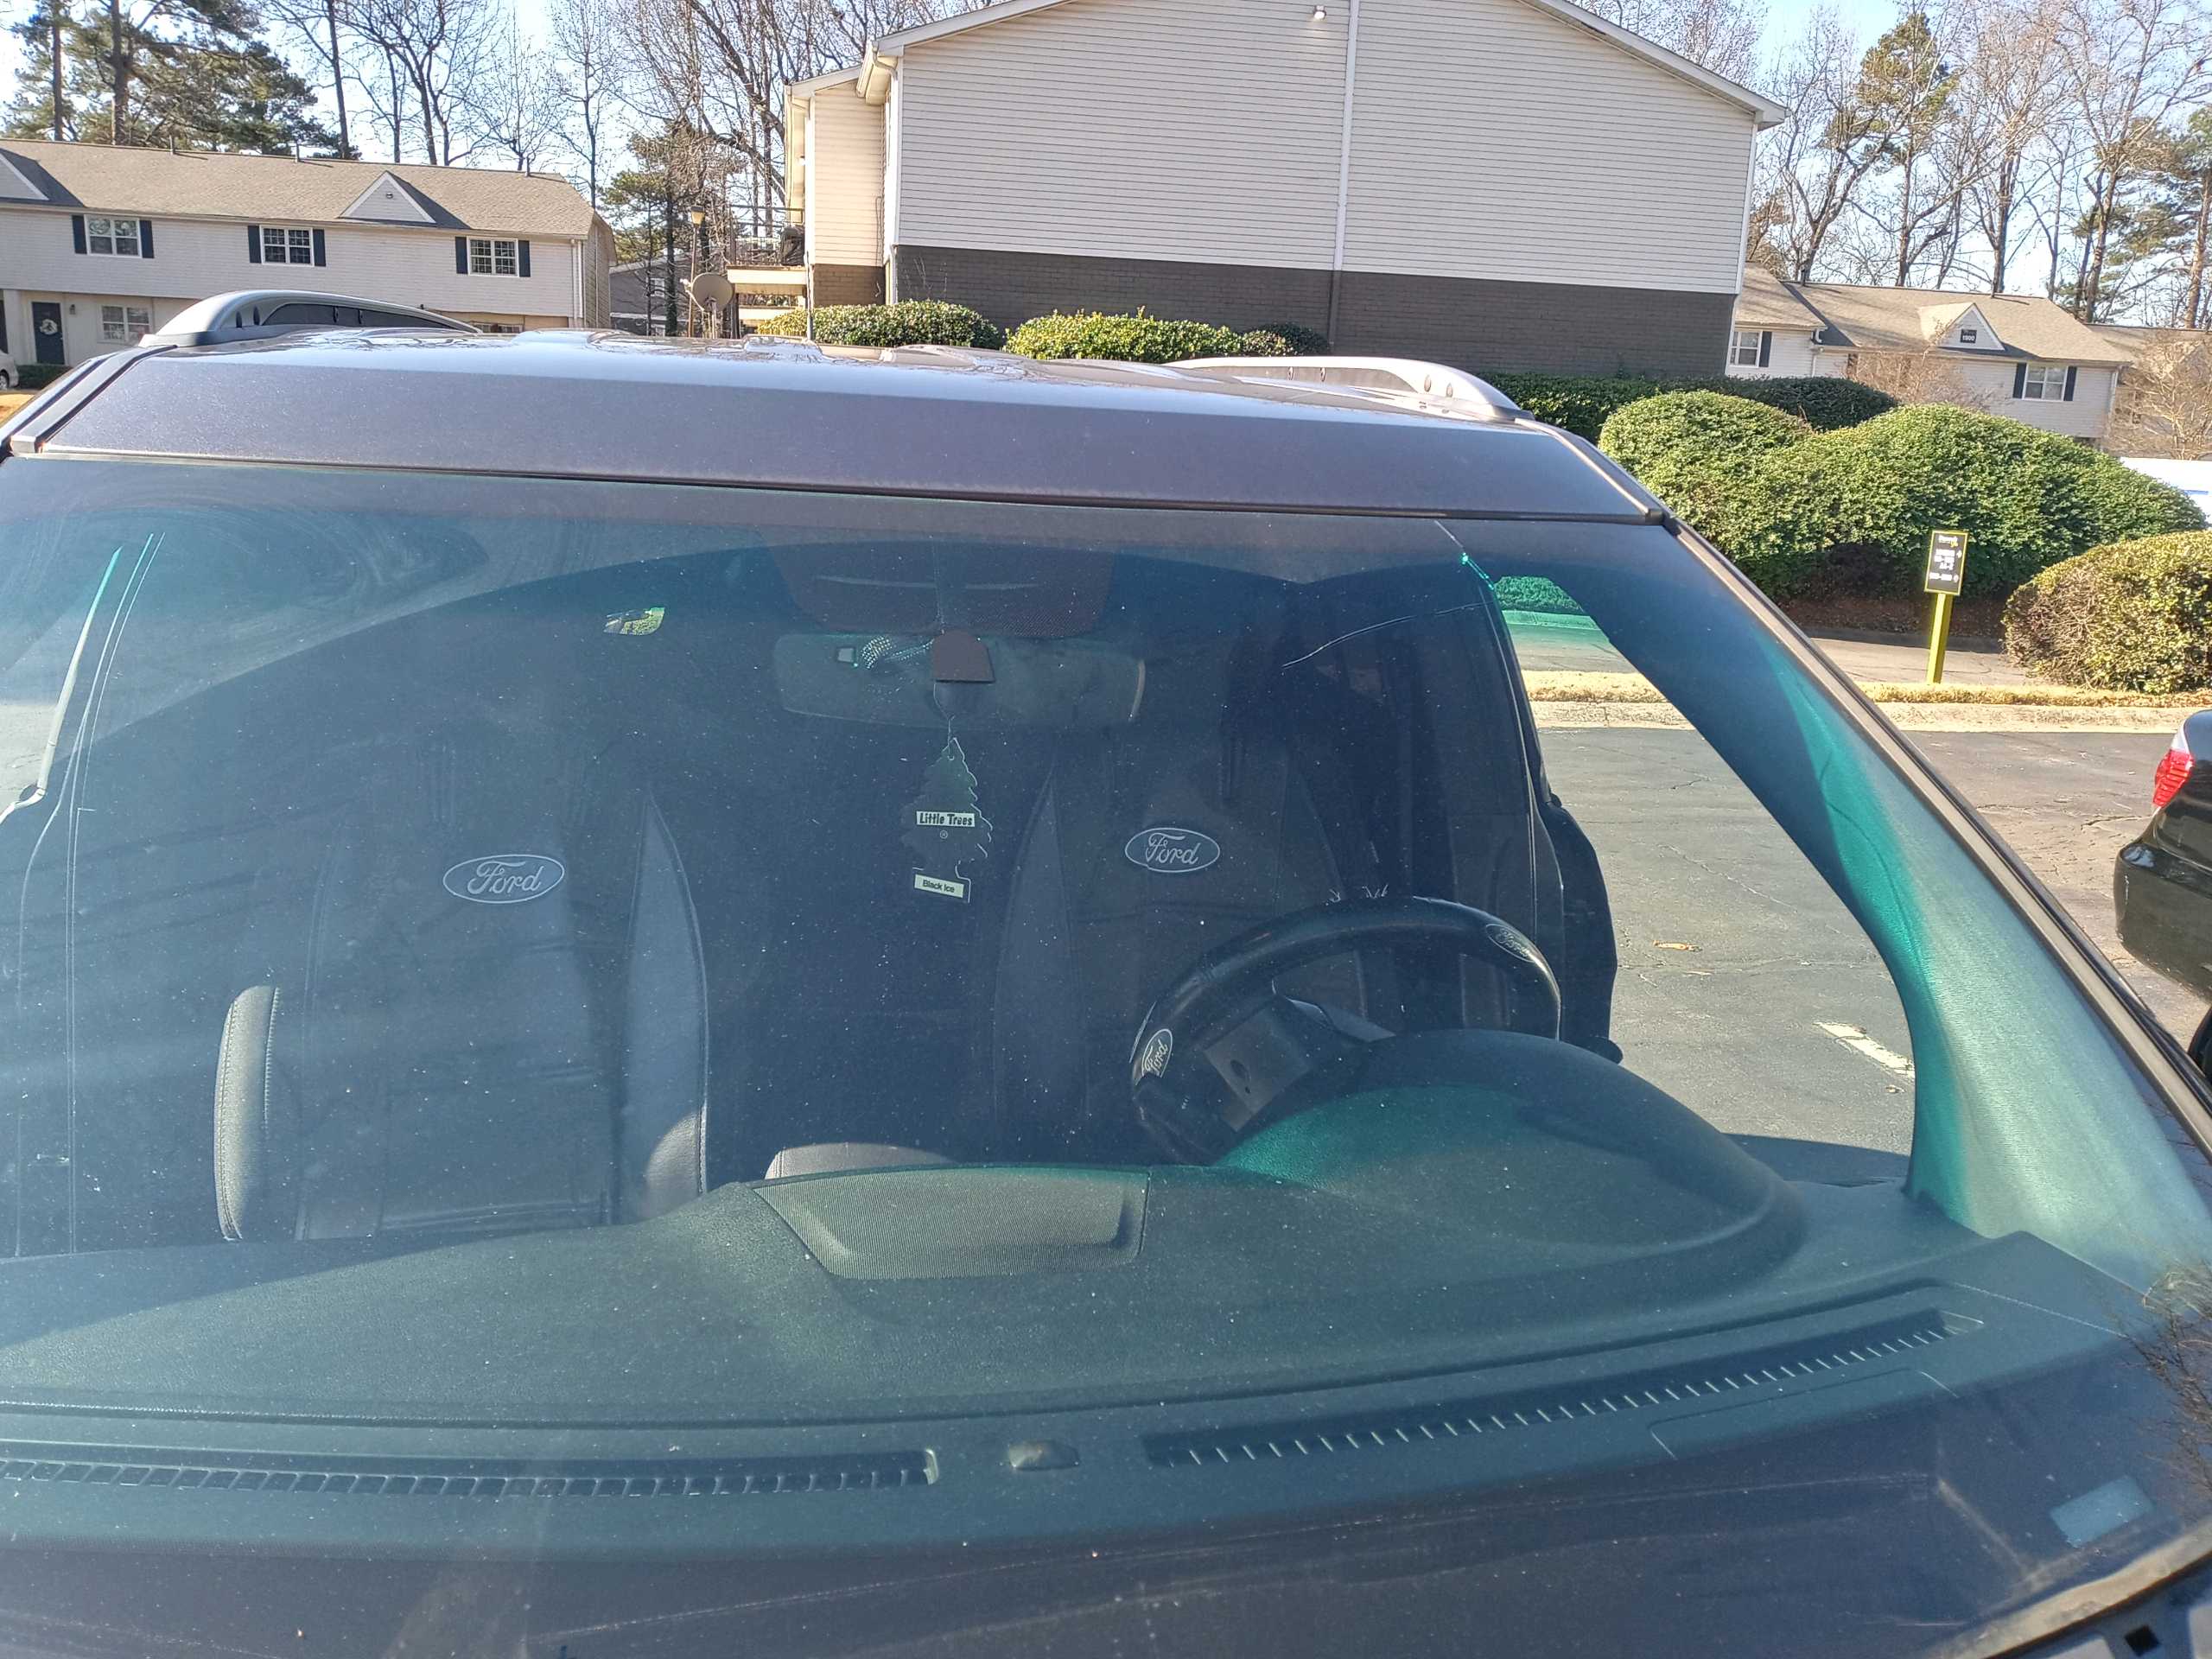 2018 Ford Explorer cracked windshield in Dunwoody GA 30350